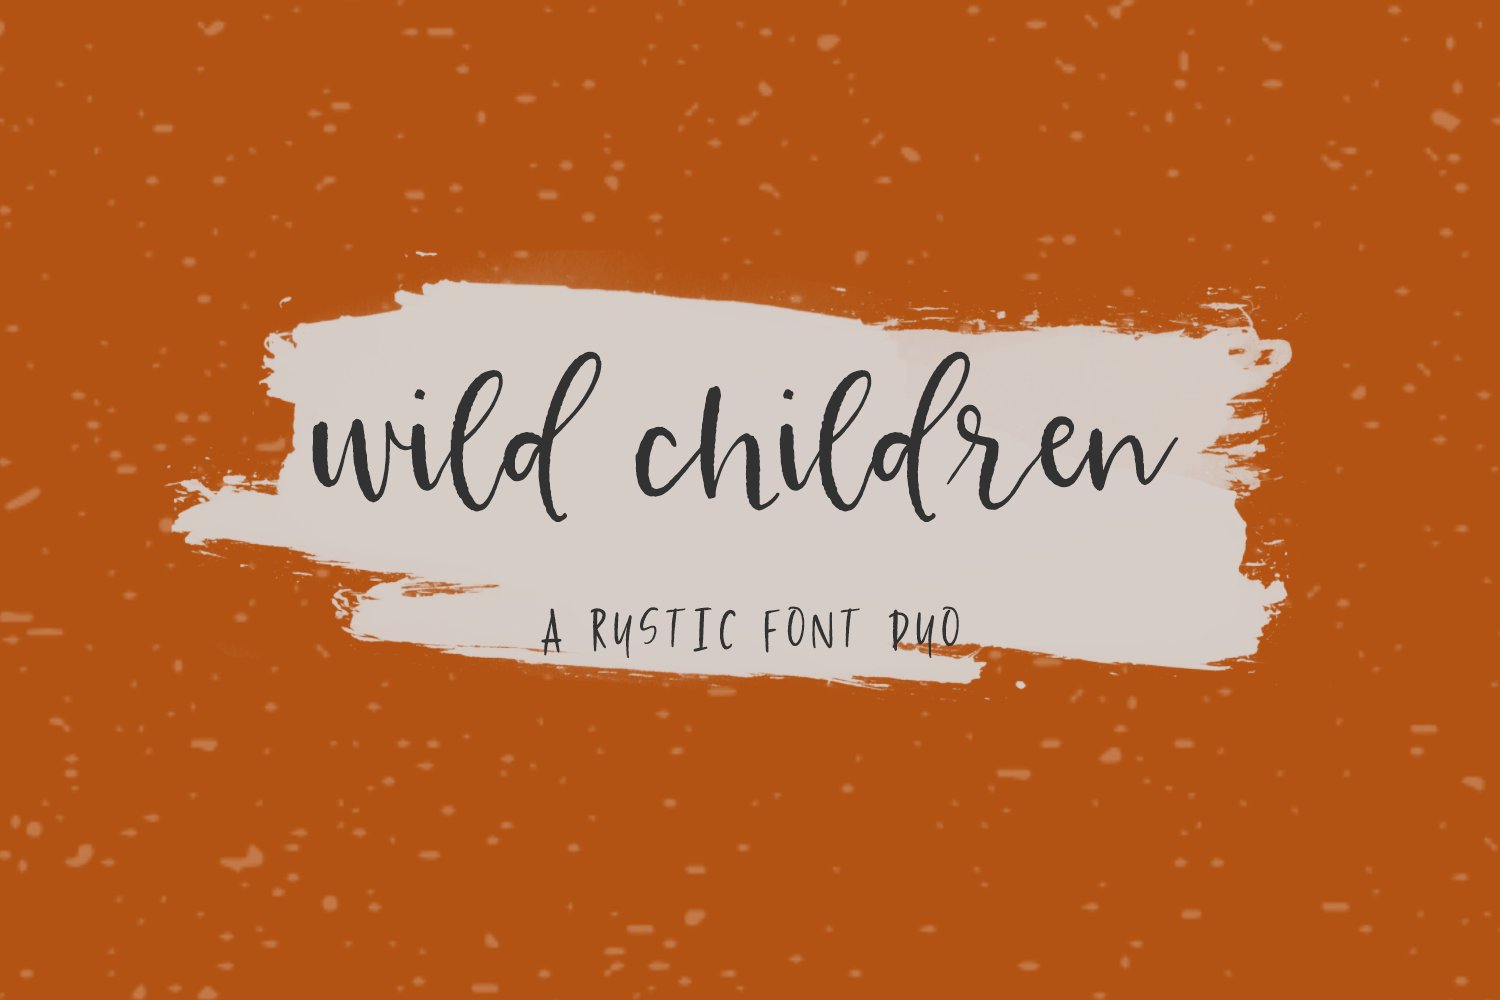 Wild Children Rustic Font Duo cover image.